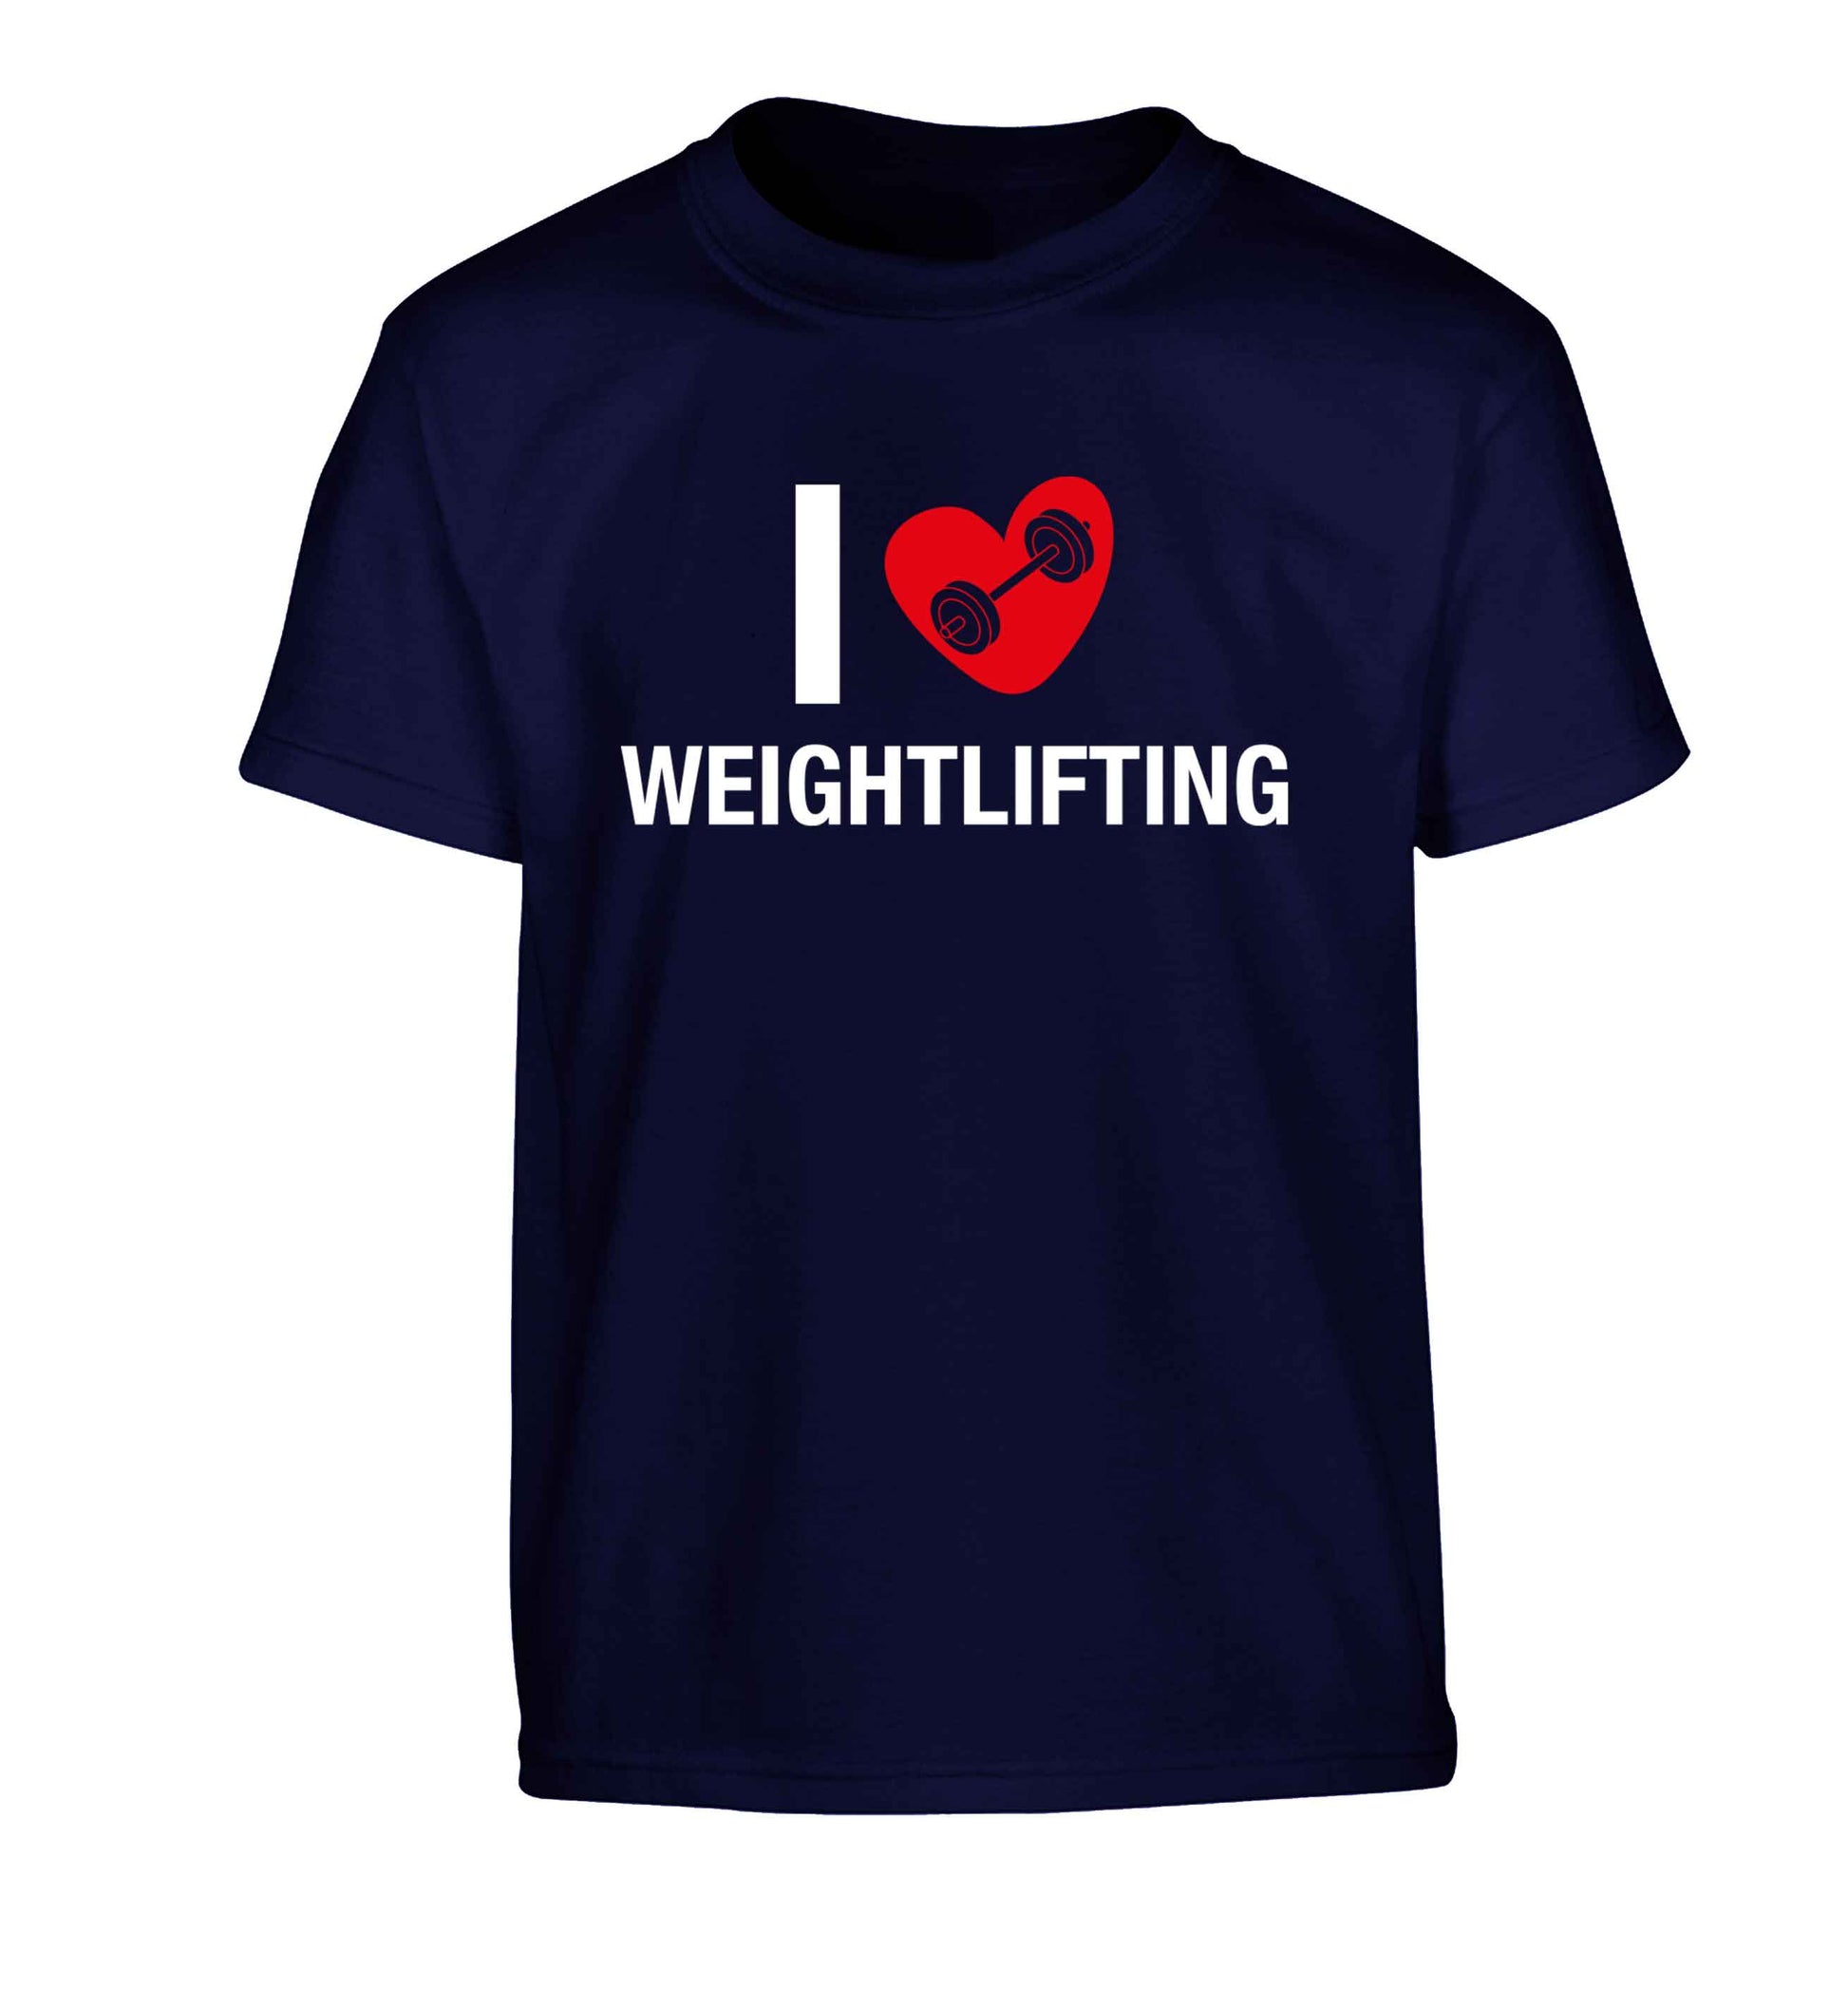 I love weightlifting Children's navy Tshirt 12-13 Years